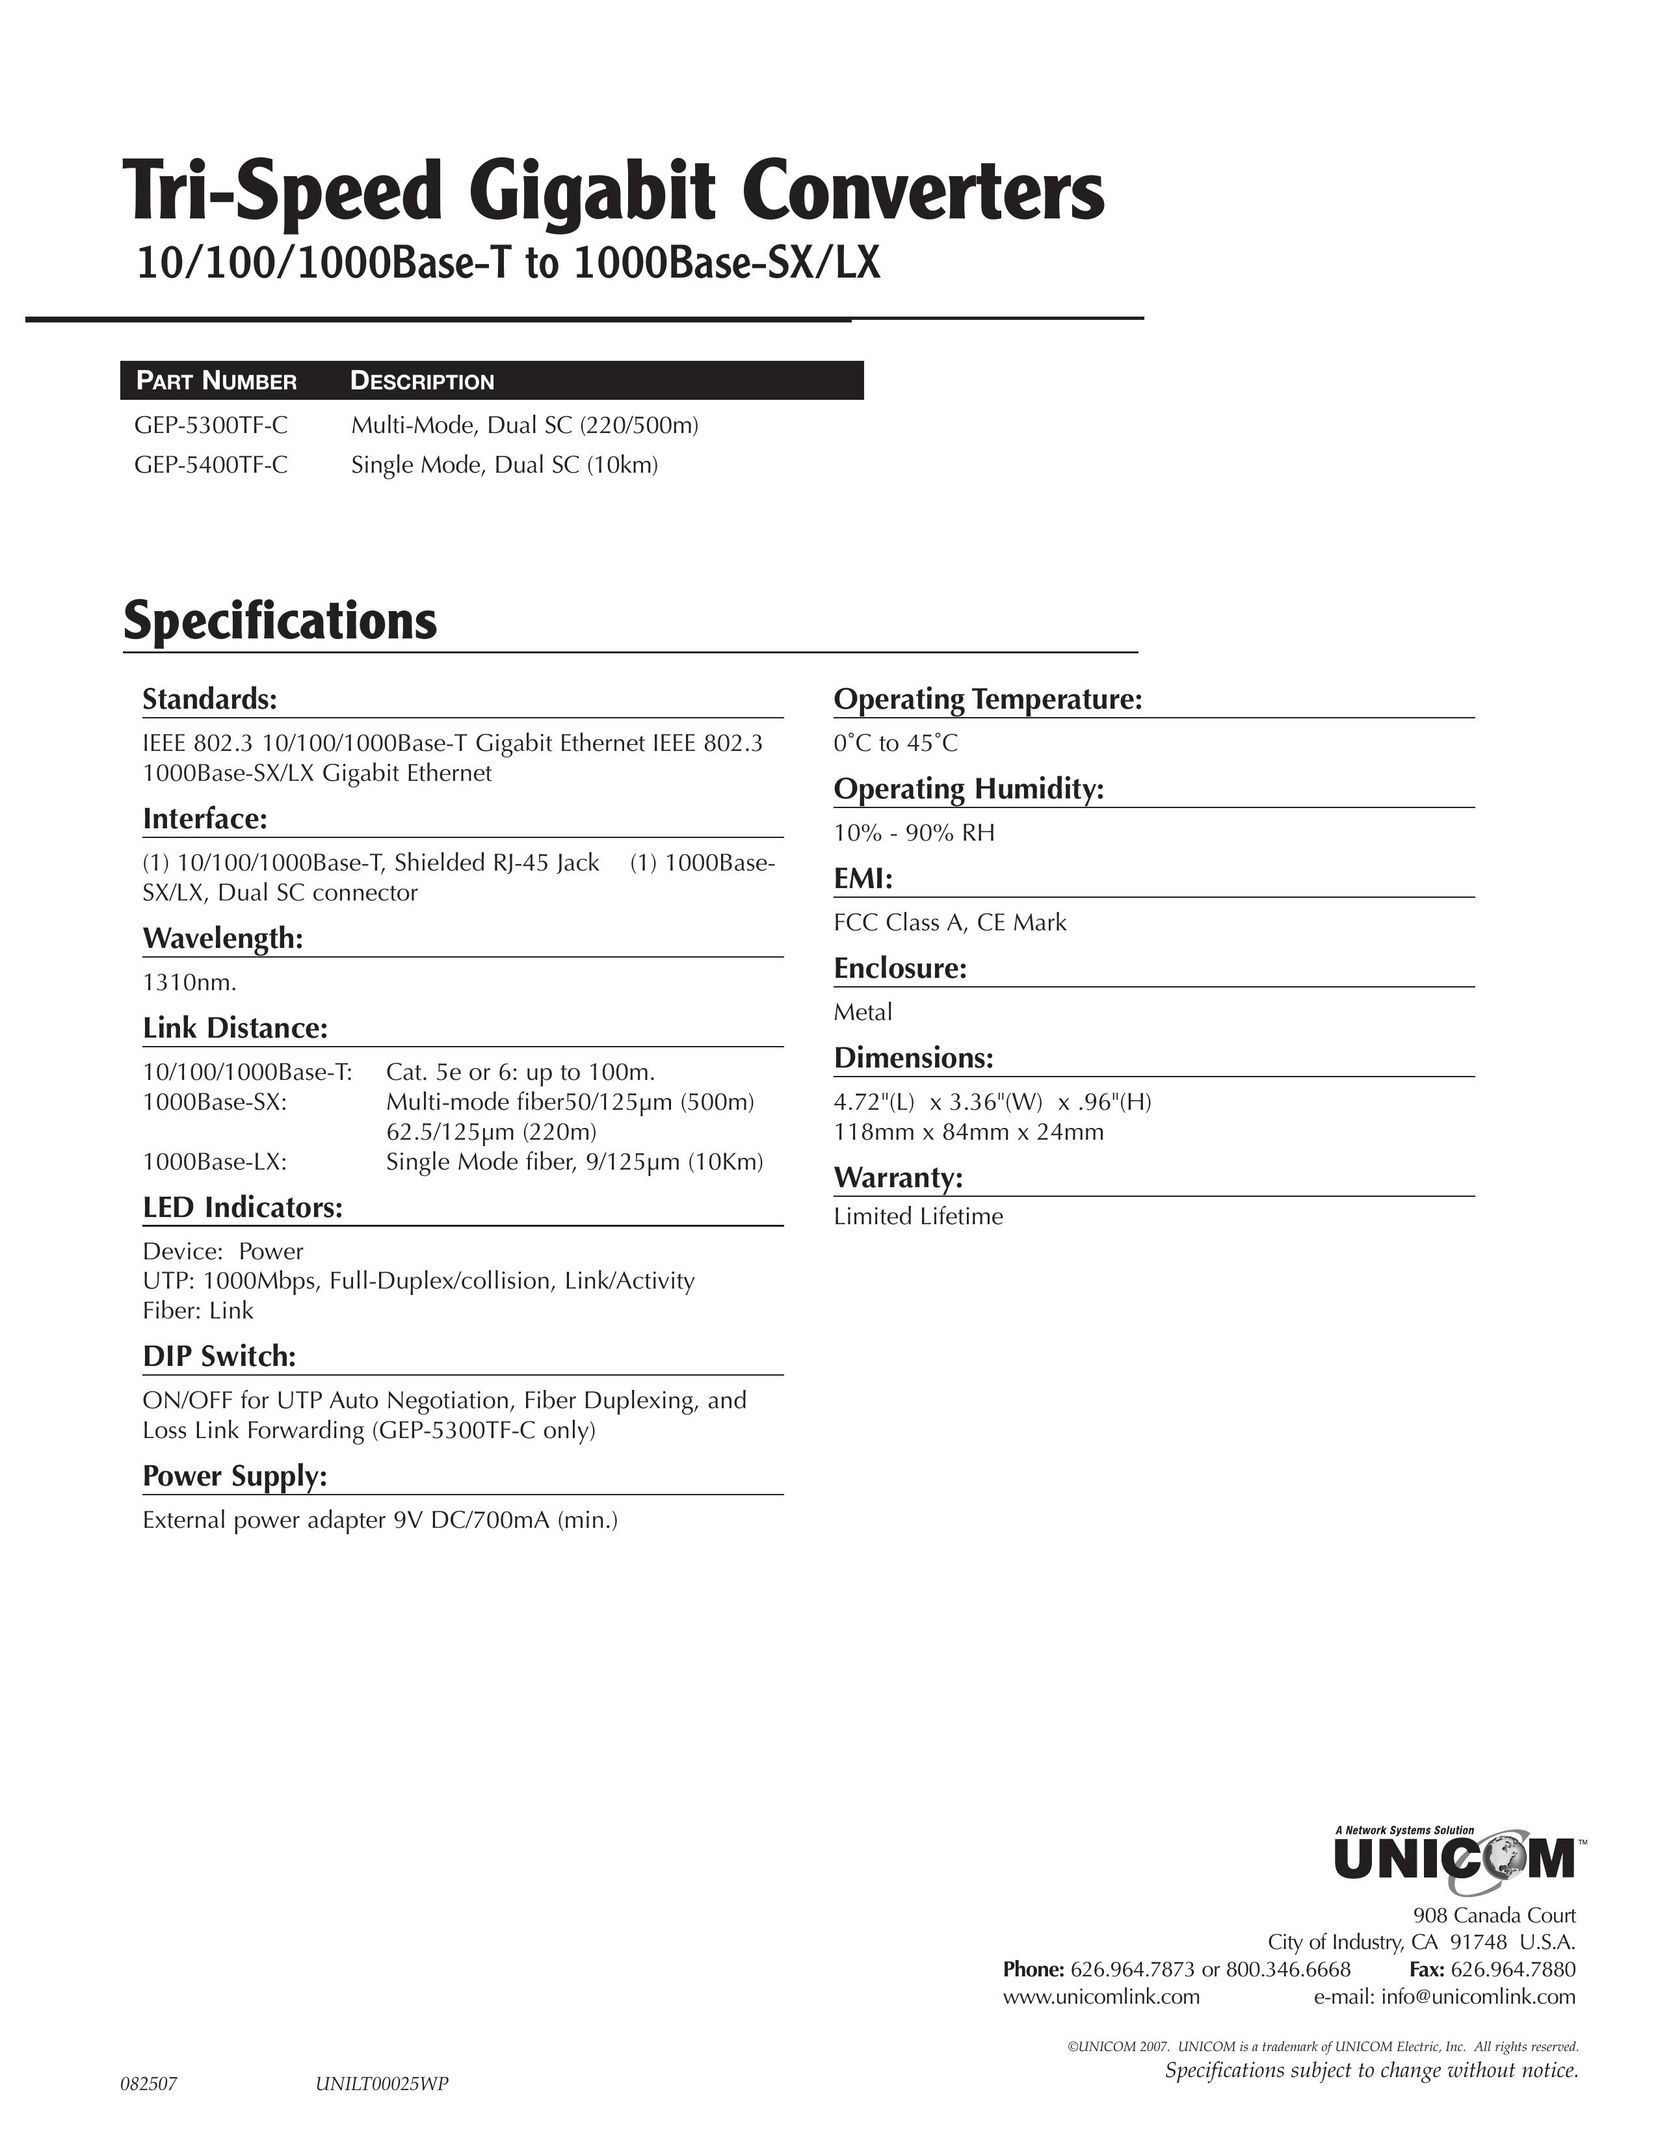 UNICOM Electric 1000Base-LX Network Card User Manual